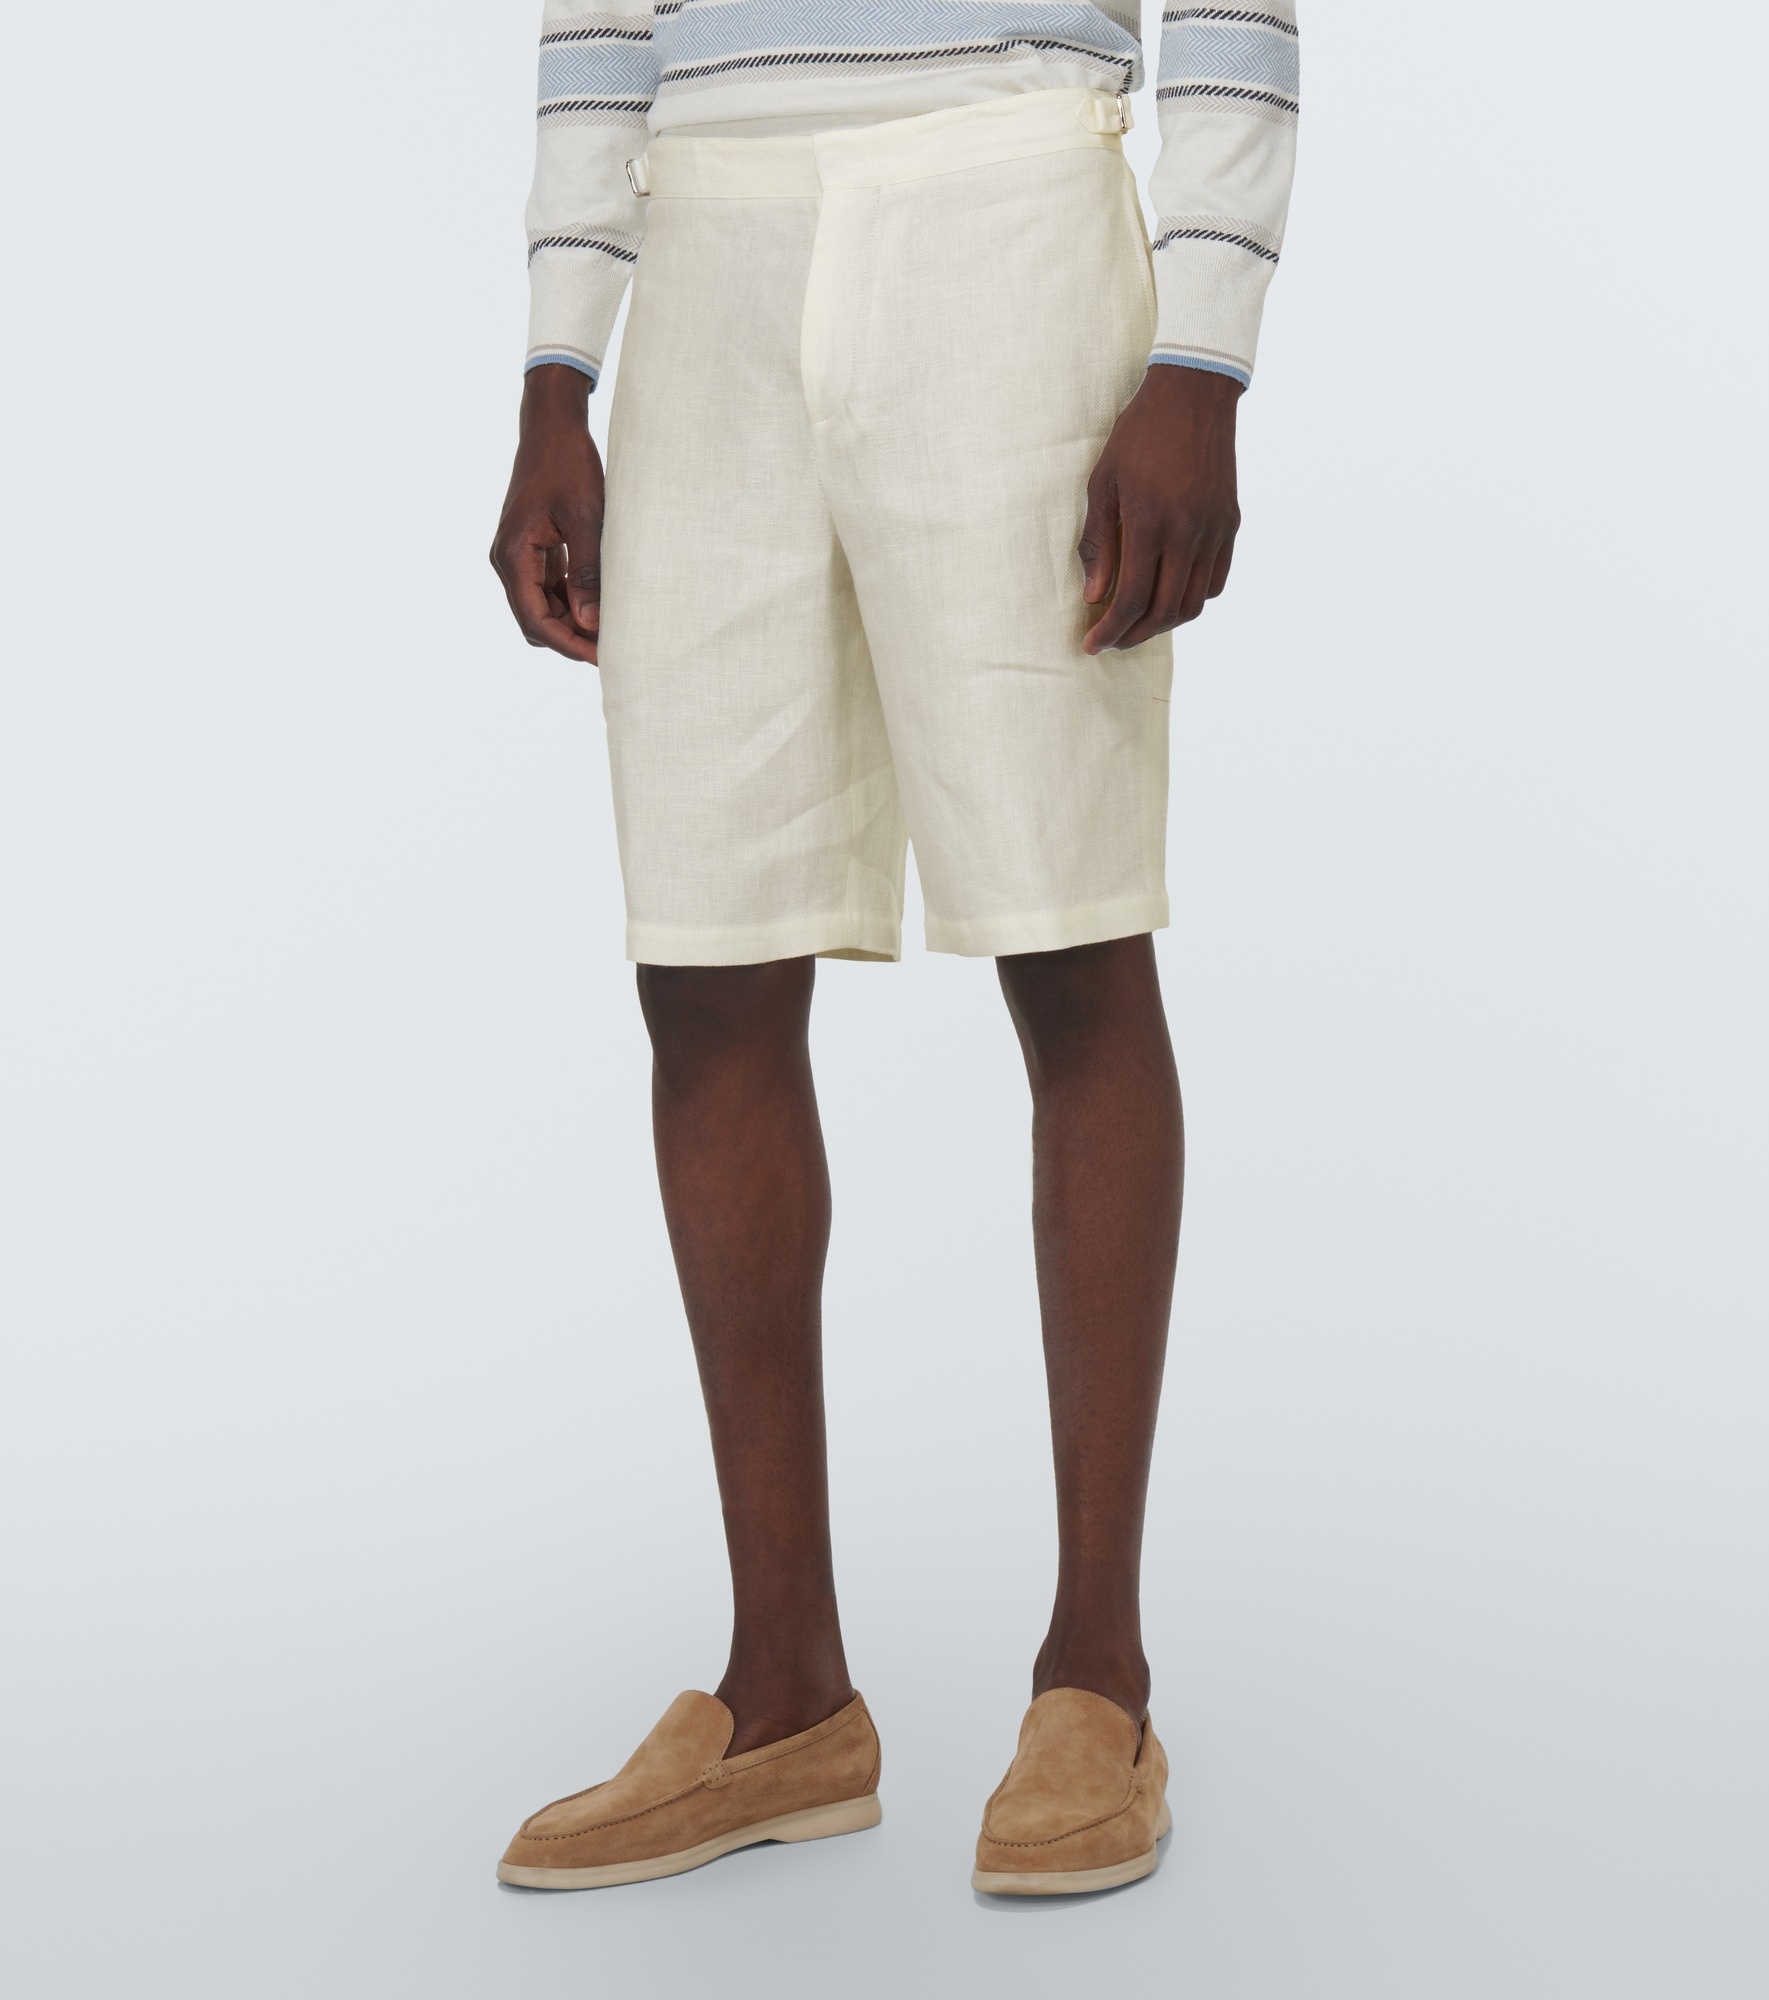 Majuro linen Bermuda shorts - 3